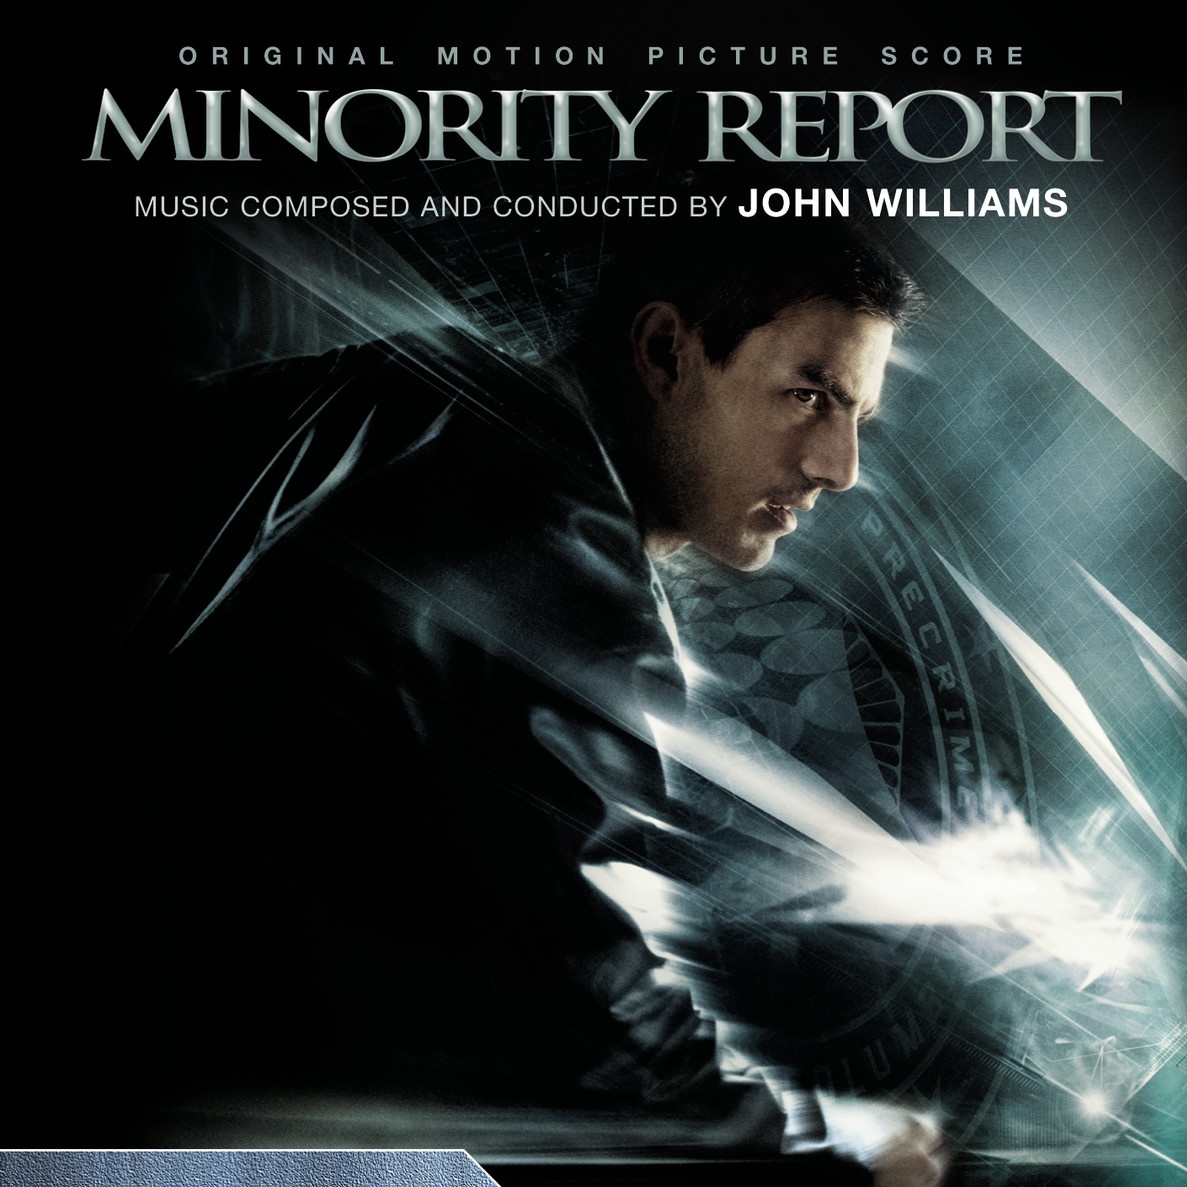 Sean's Theme - Minority Report Soundtrack